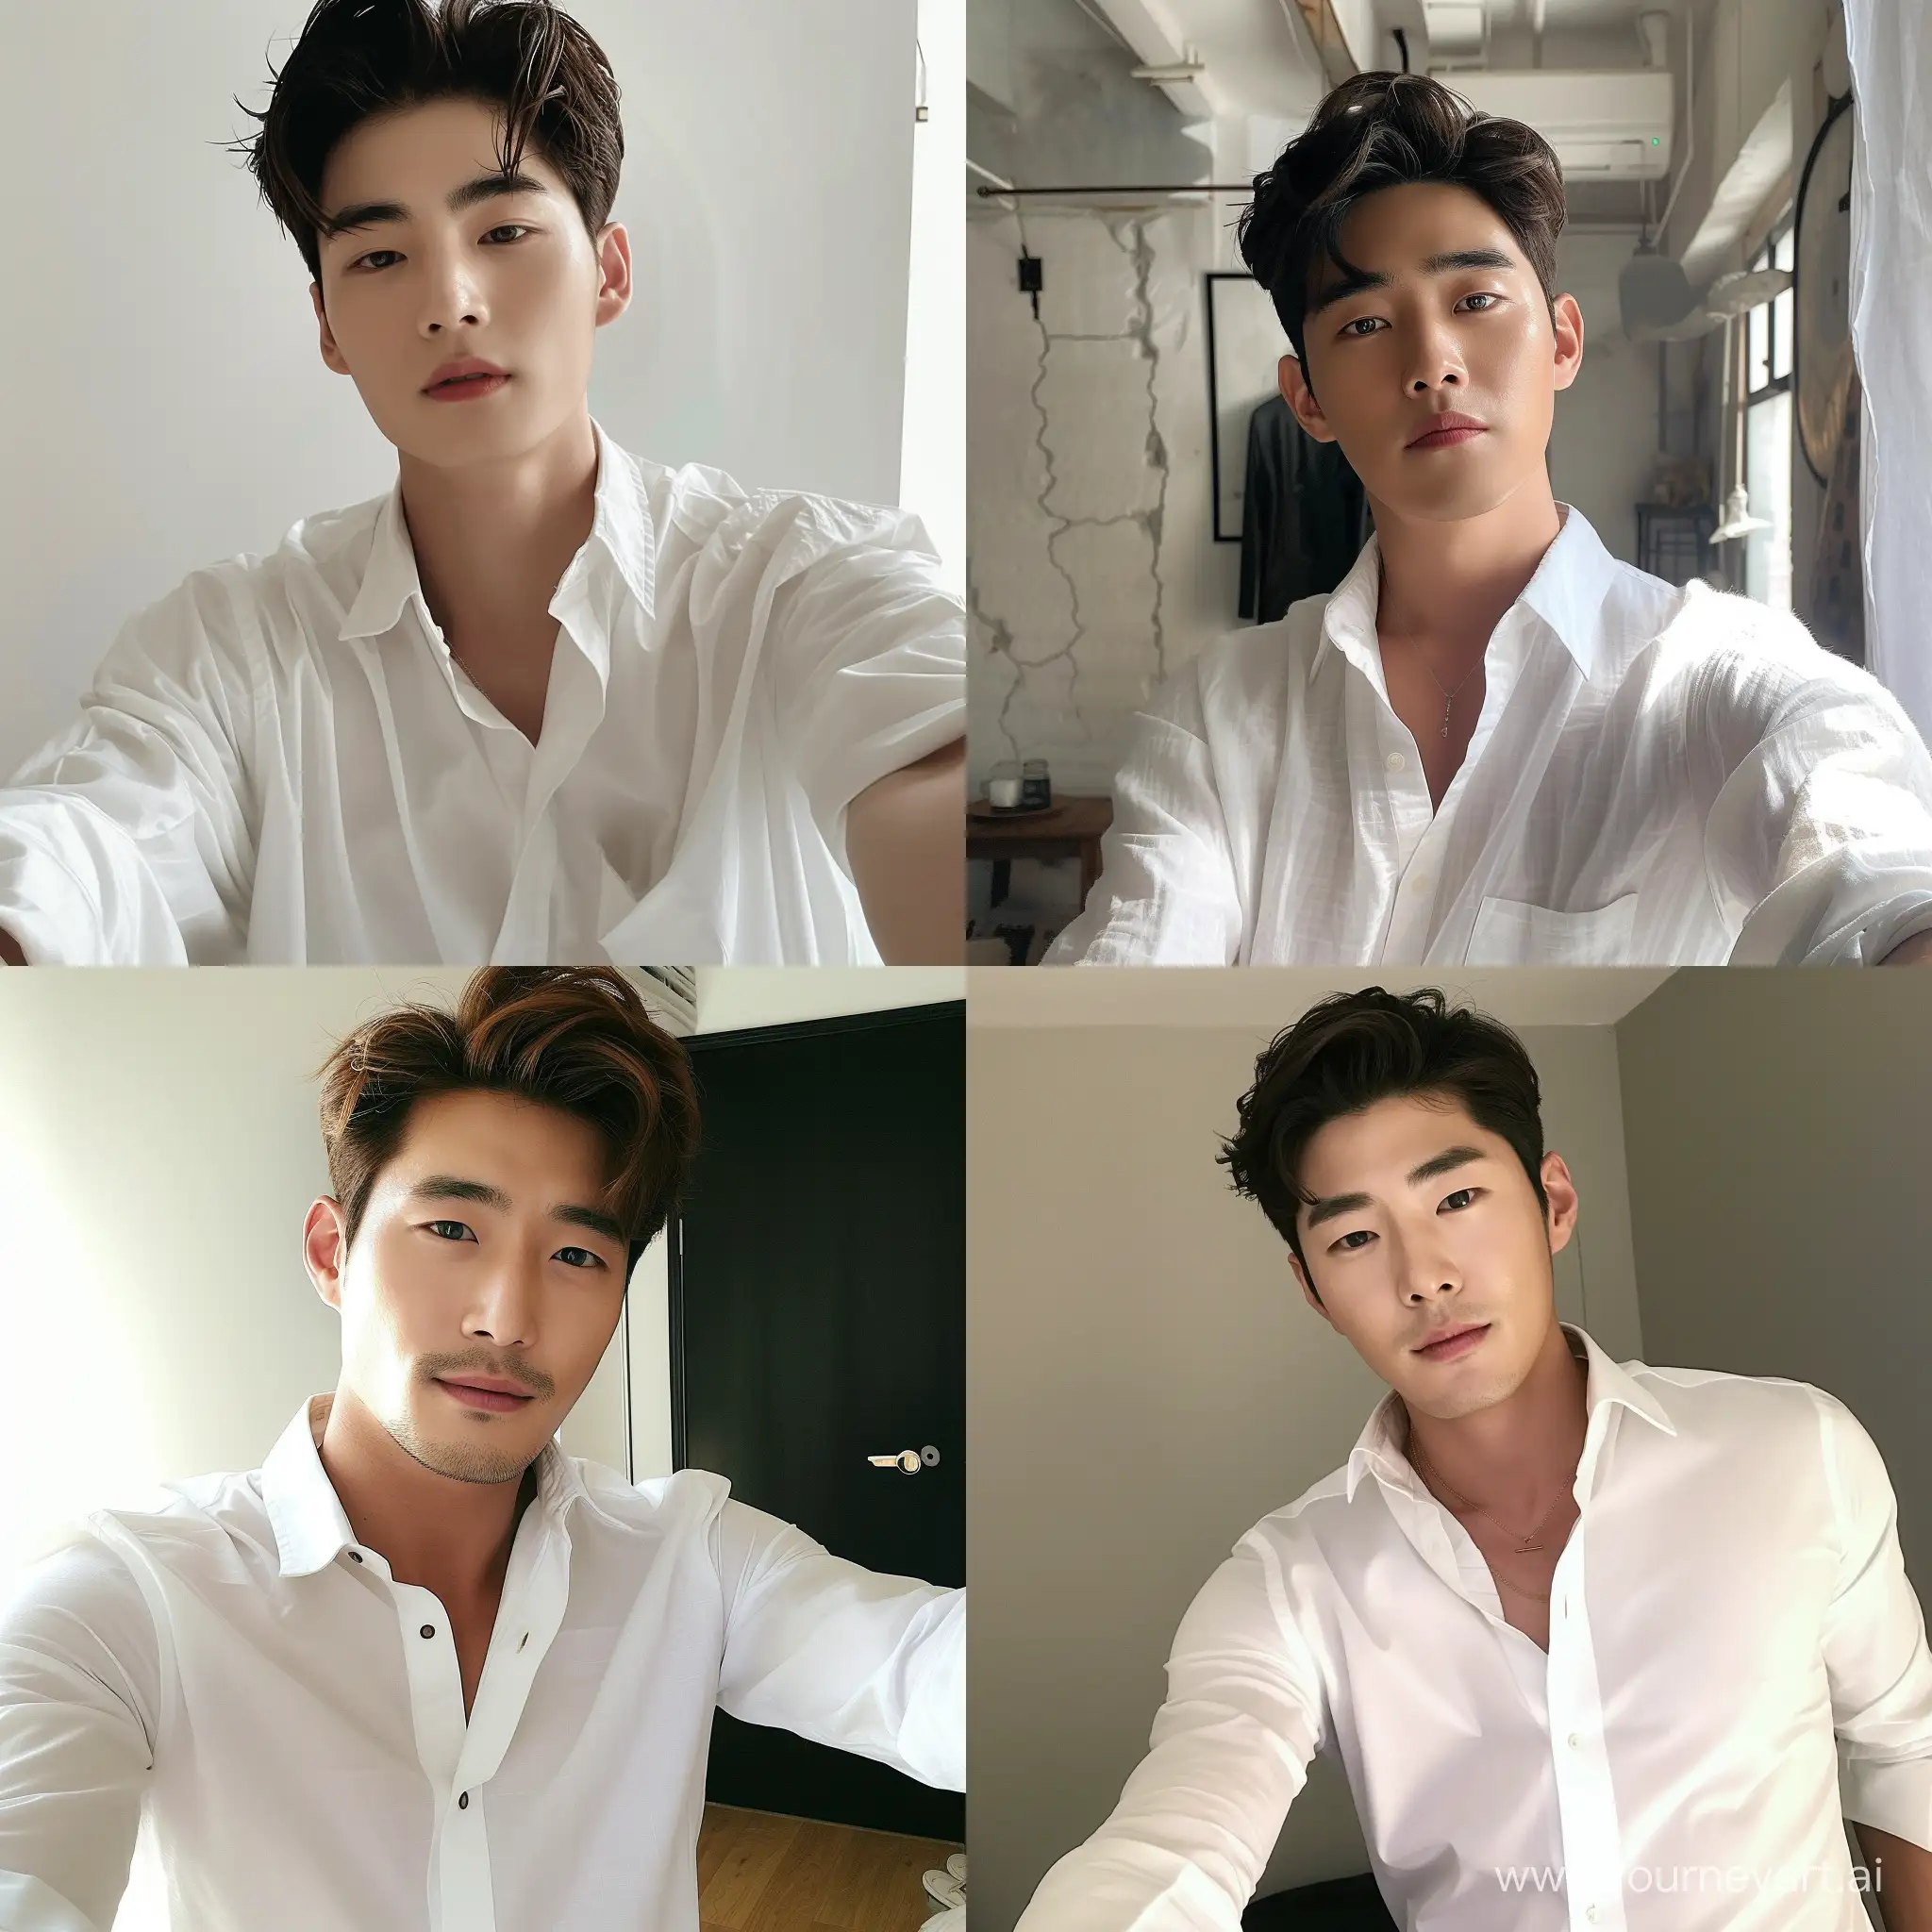 Stylish-Korean-Man-Capturing-a-Selfie-Moment-in-Crisp-White-Shirt